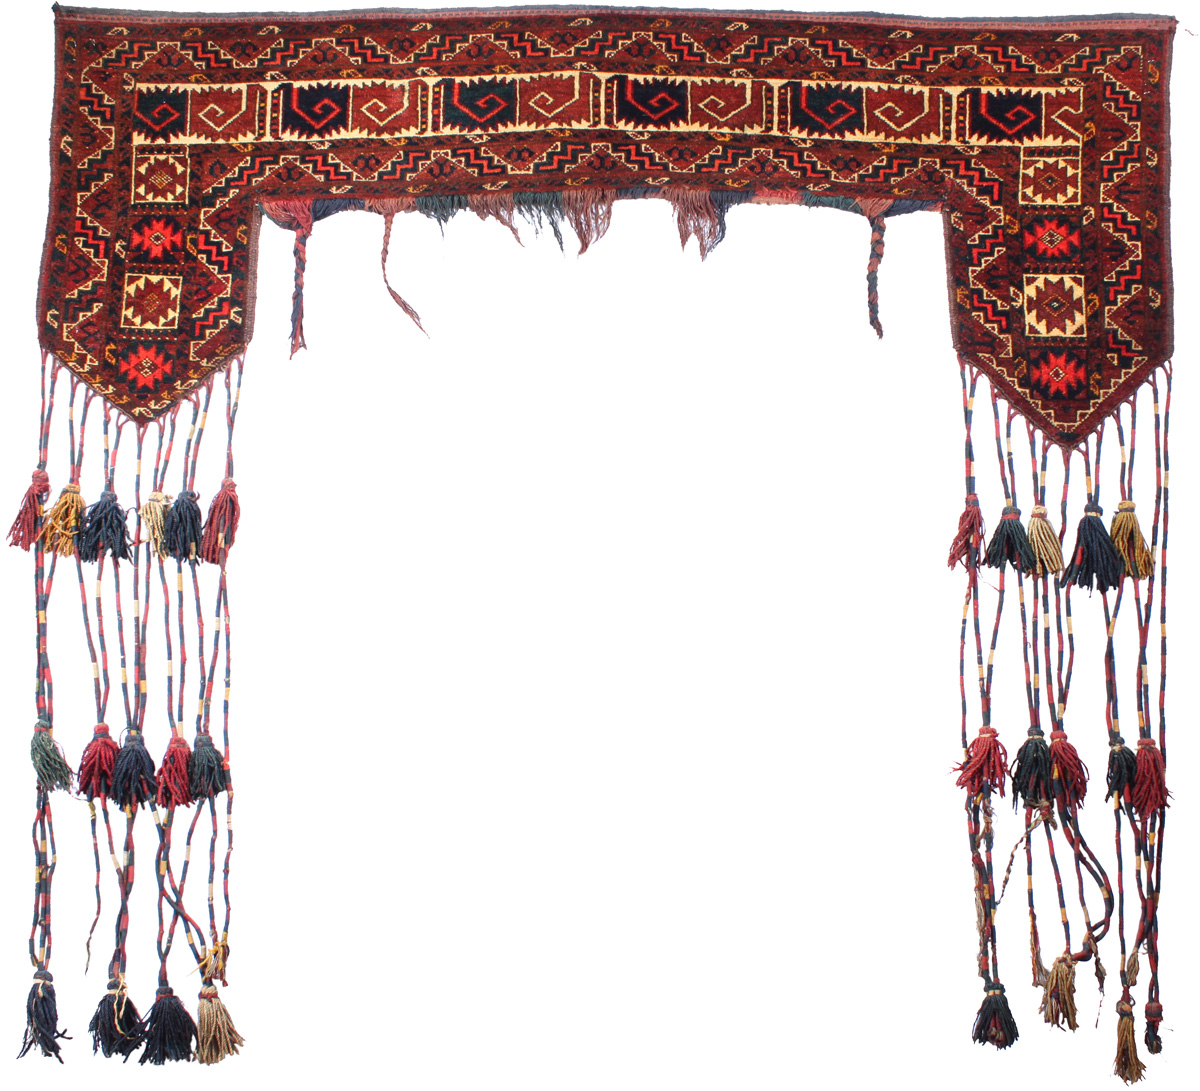 Antique Ersari Kapunuk - a genuine Jallar Paidar with Tassels - שטיח תורקמני עתיק - ארסרי - Back To List of Antique Turkoman Rugs